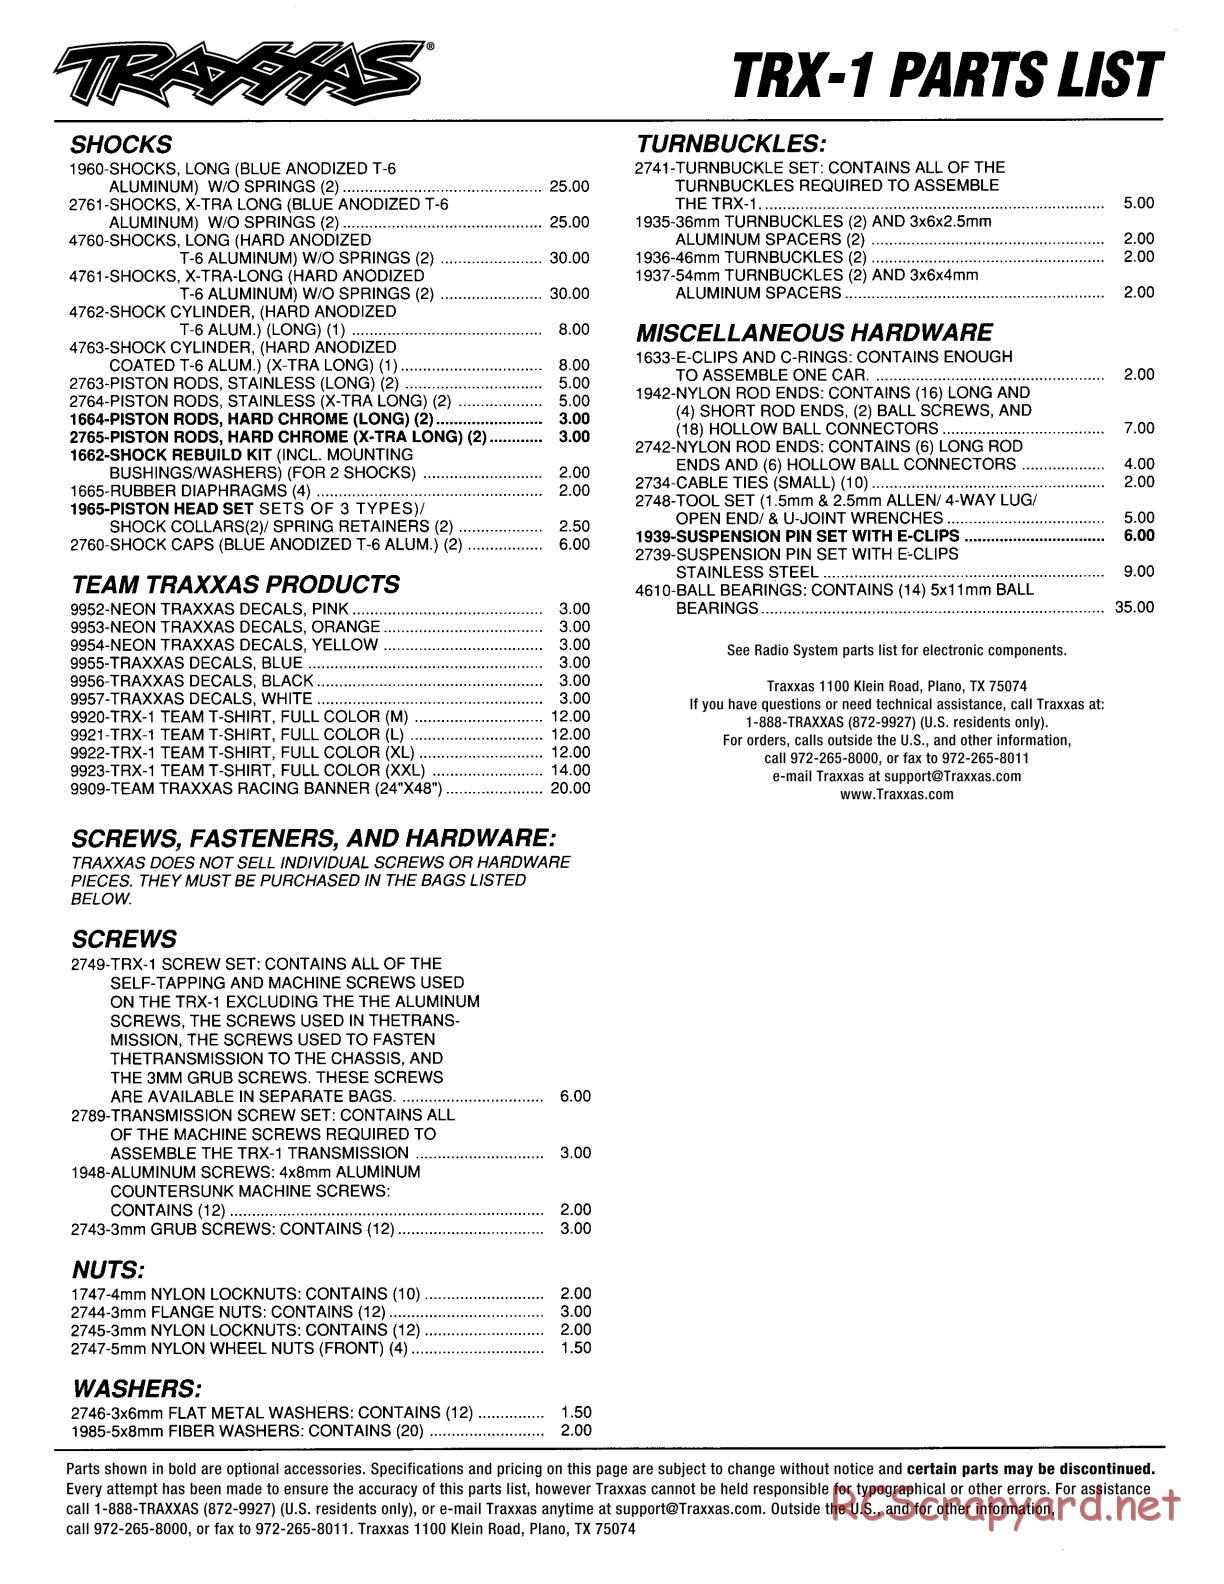 Traxxas - TRX-1 (1991) - Parts List - Page 2